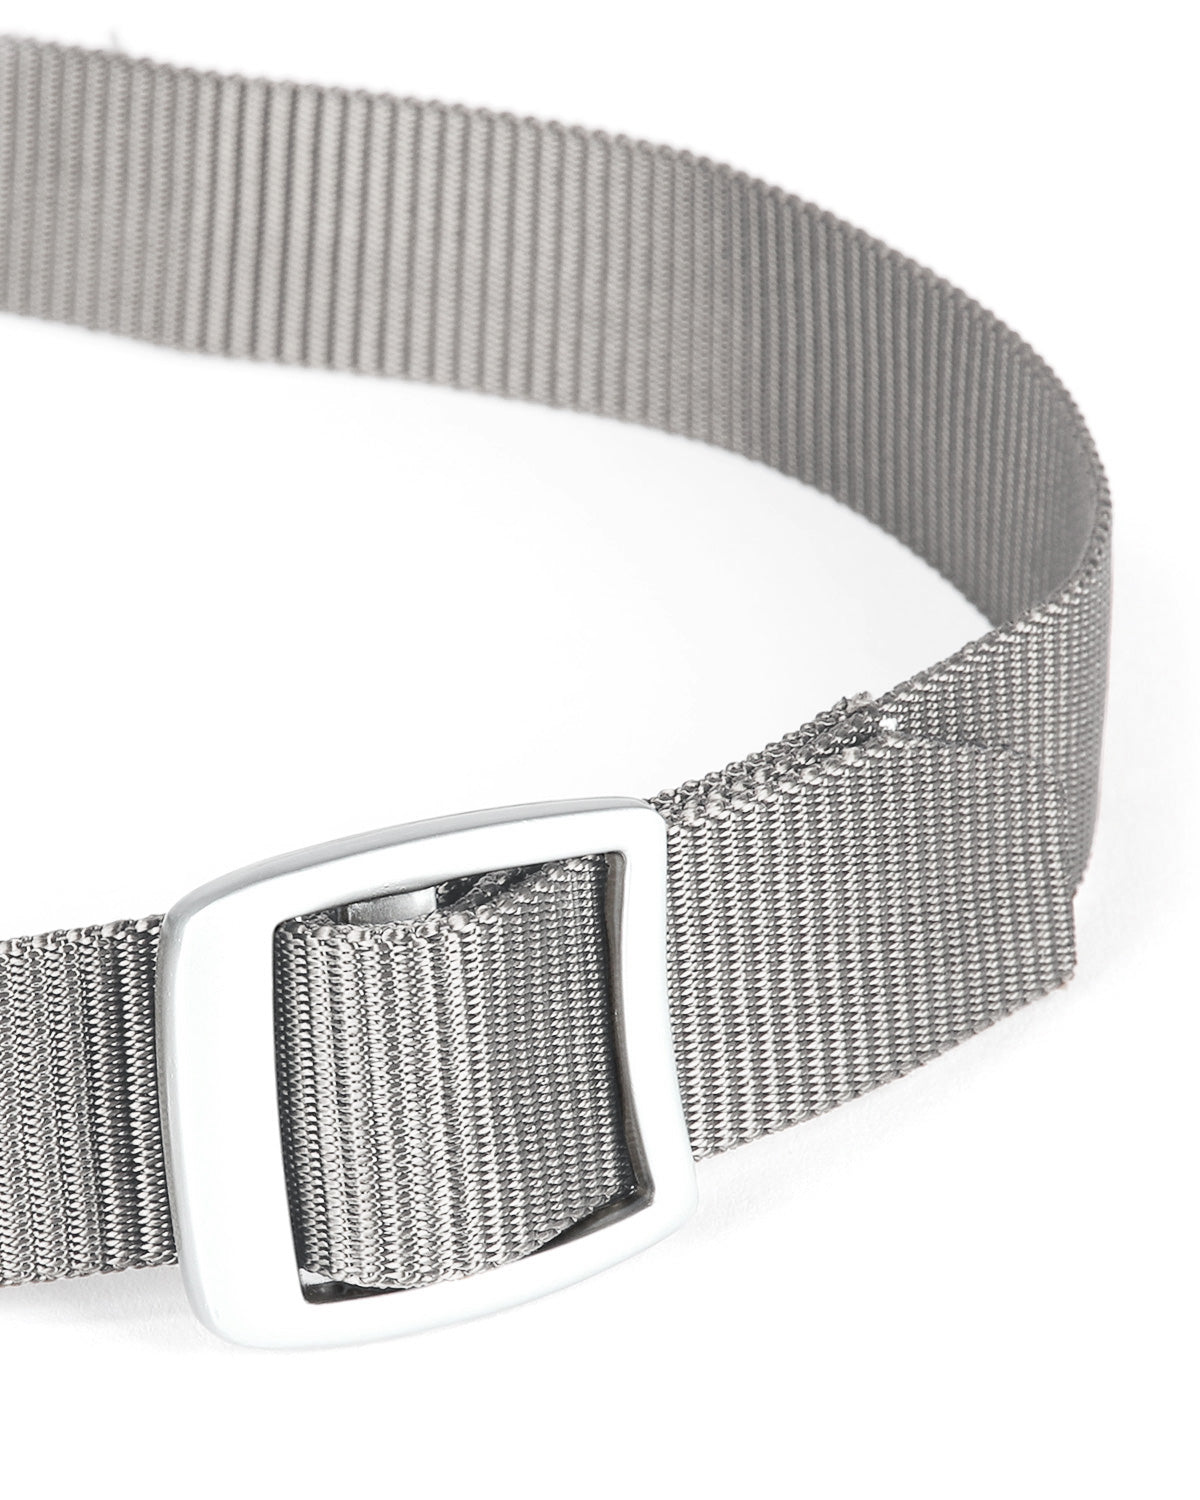 Men's Adjustable Nylon Strap Military Tactical Web Belt Metal Buckle